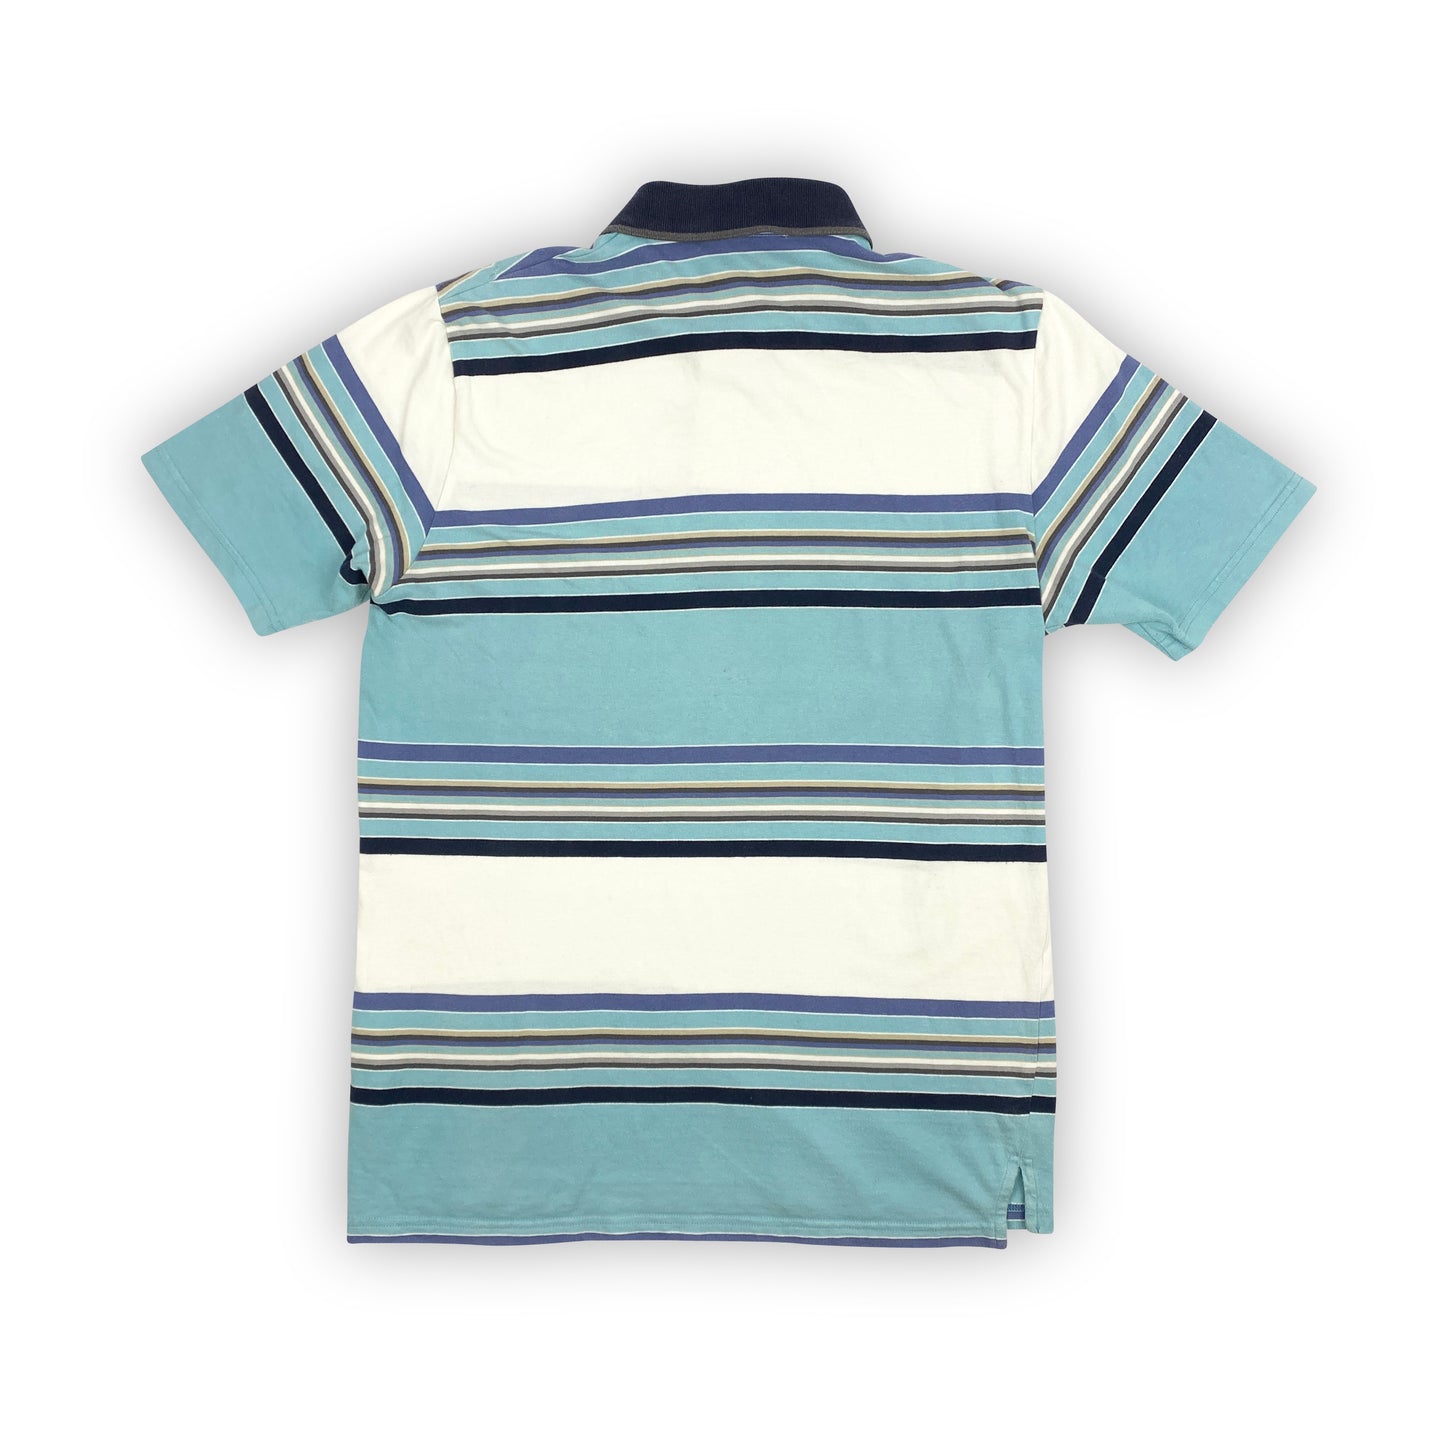 Vintage YVES SAINT LAURENT Polo Shirt